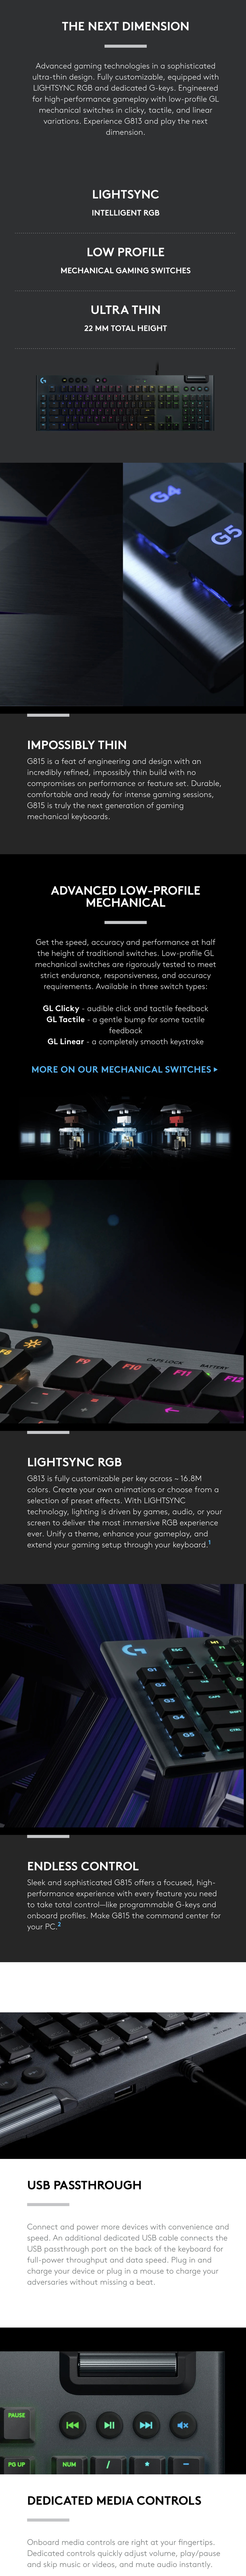 Logitech-G813-Lightsync-RGB-Mechanical-Gaming-Keyboard-Description